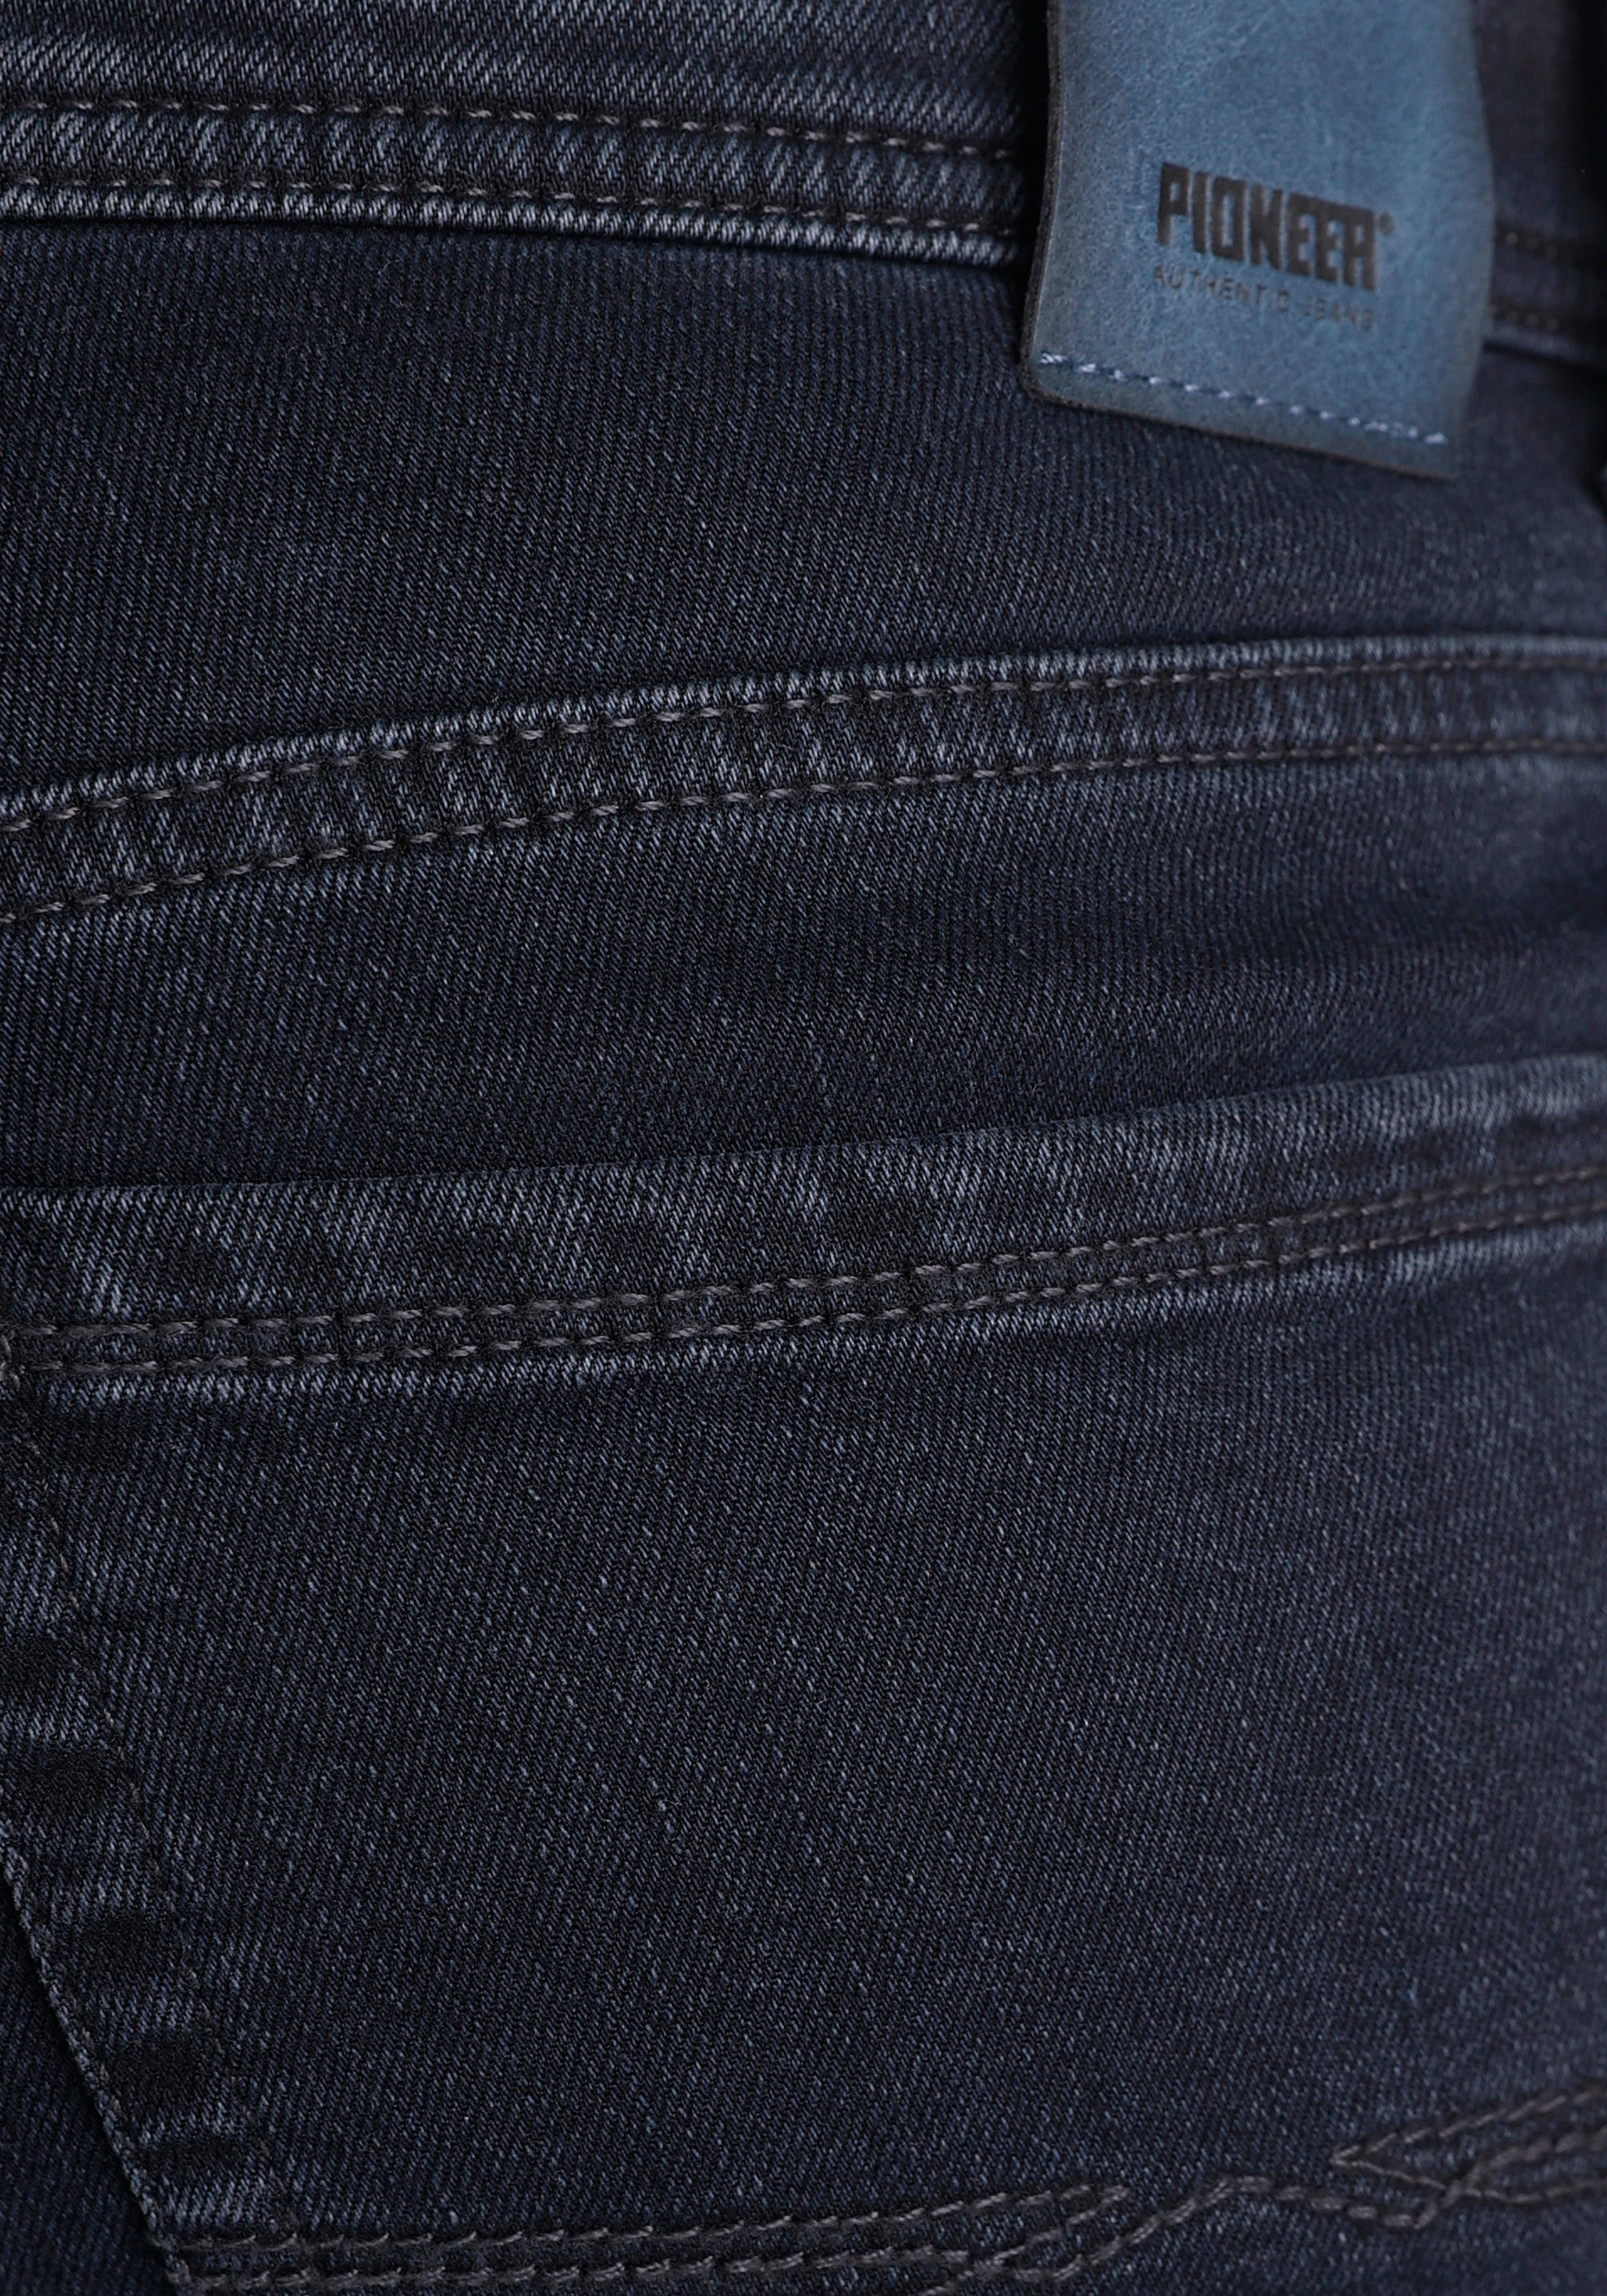 blue-black Jeans stonewash Thermojeans Pioneer Rando Authentic